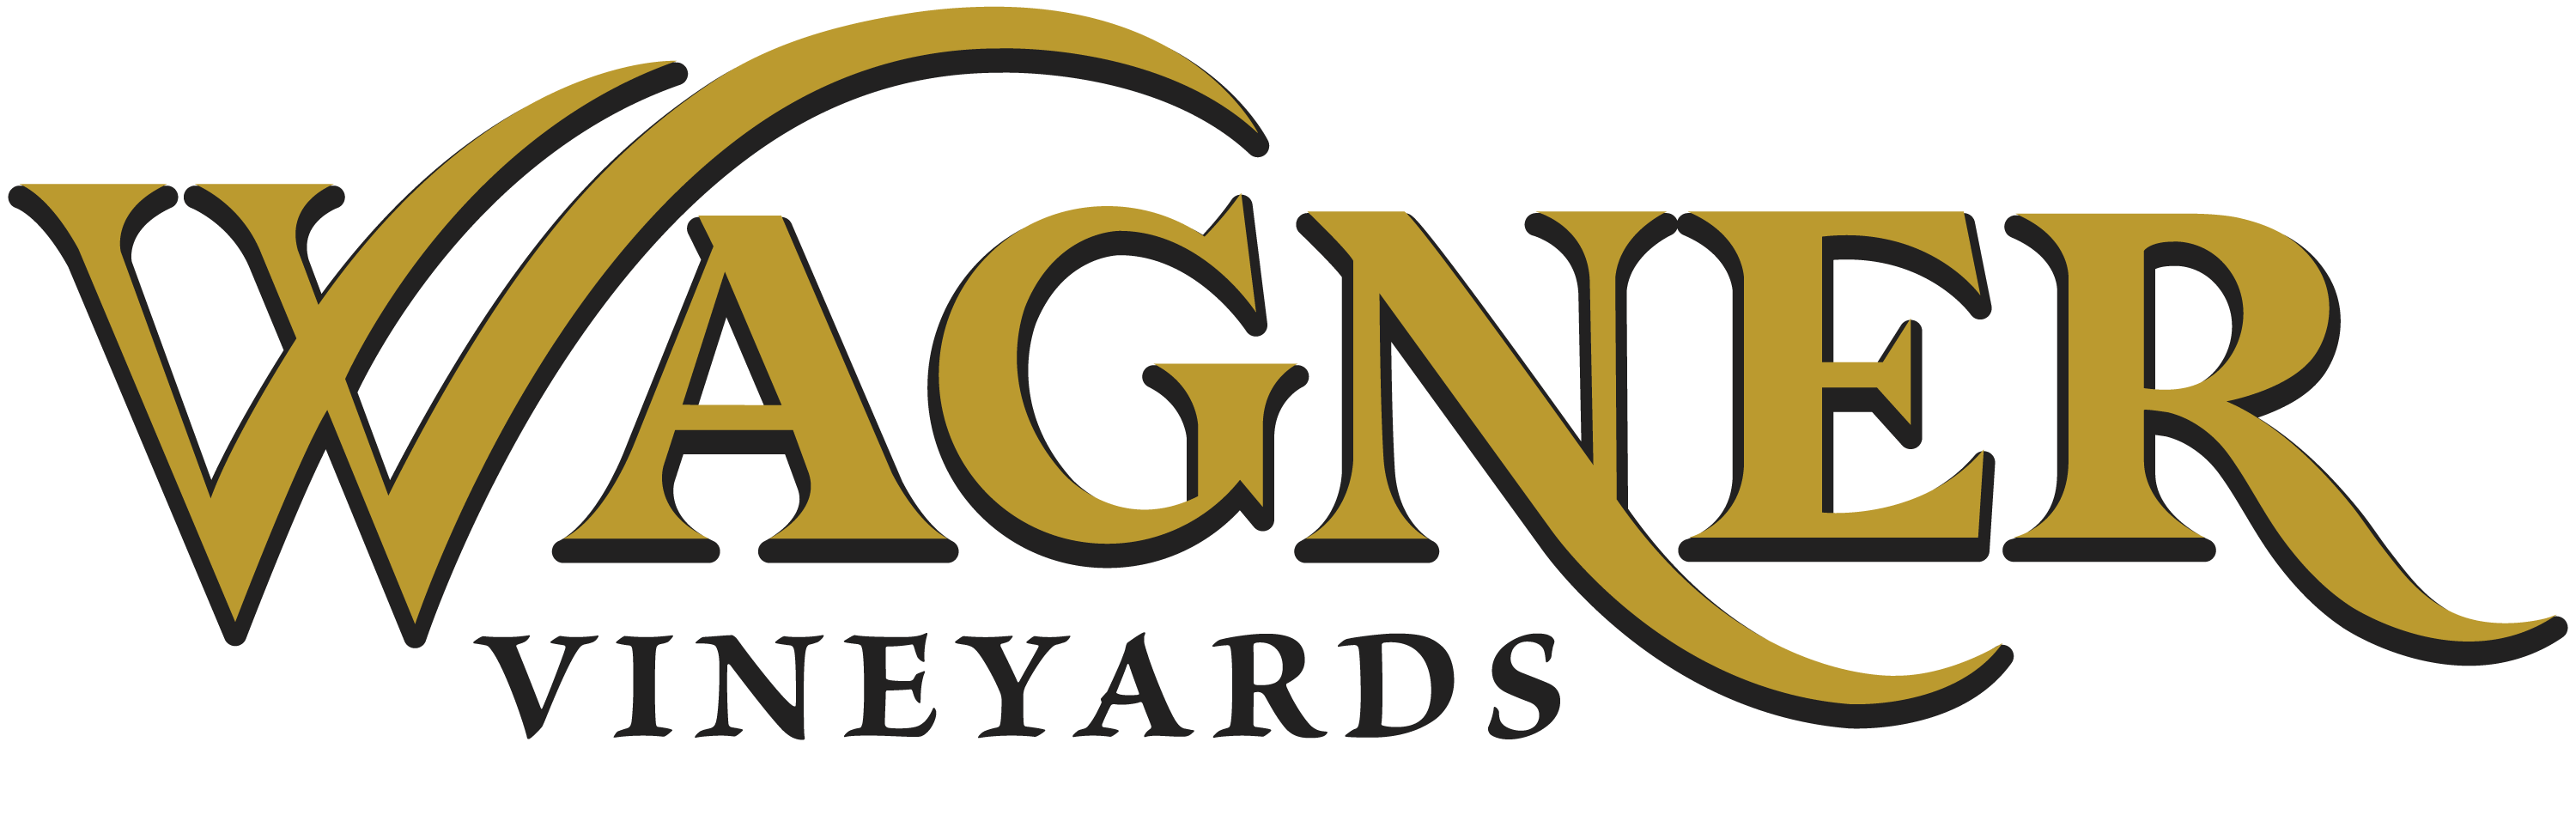 Wagner-Vineyards-Logo